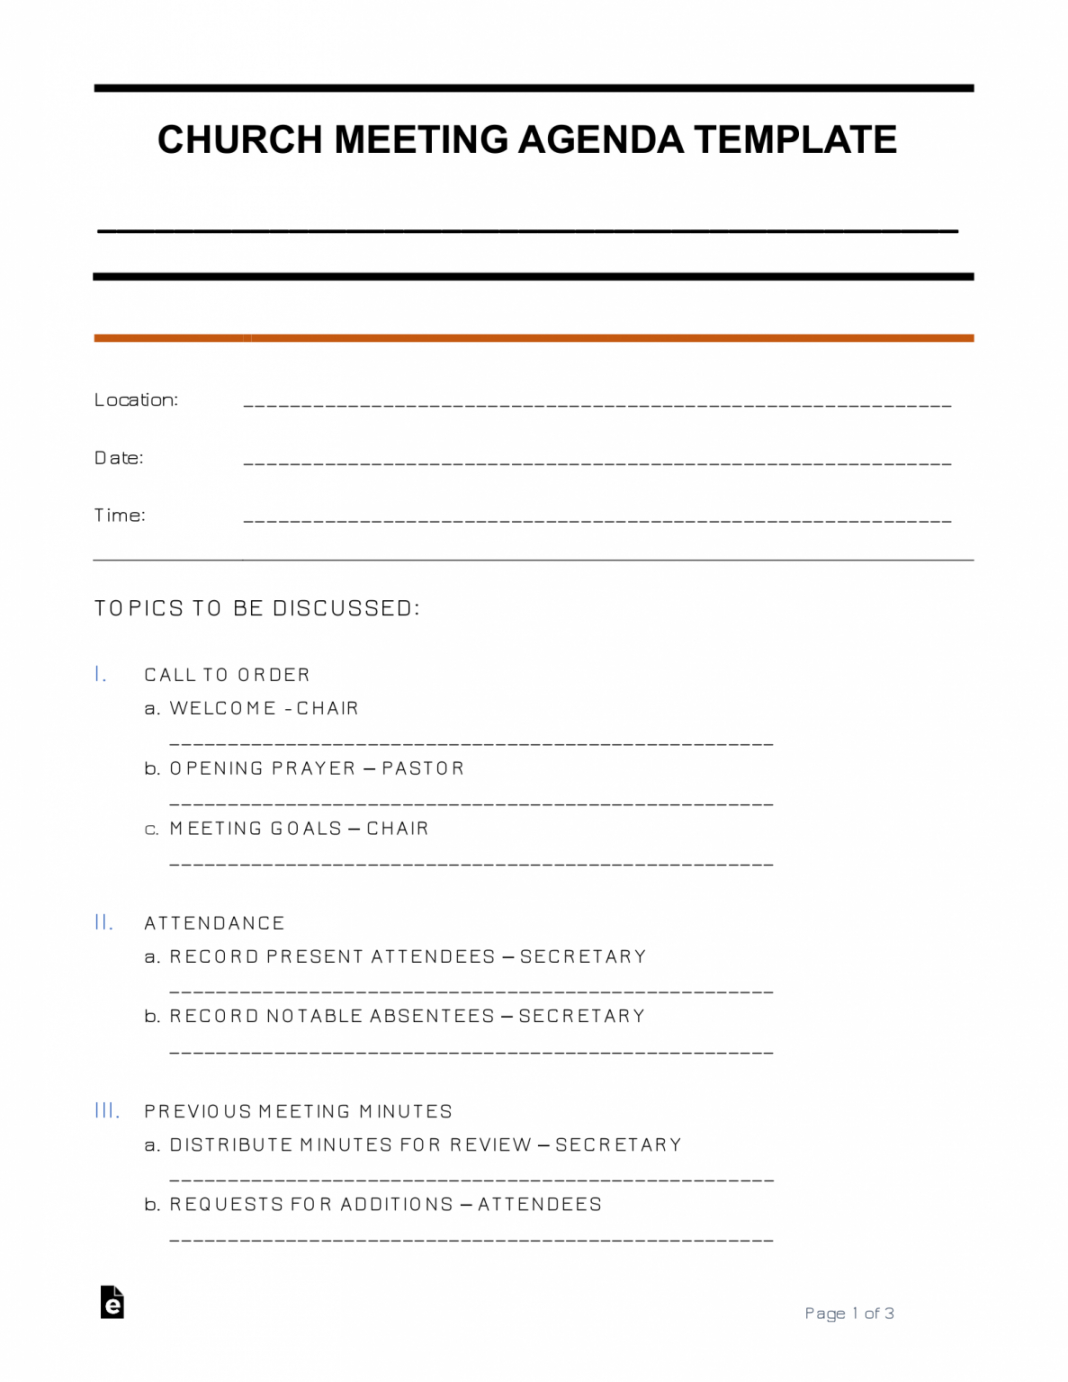 free church meeting agenda template  sample  word  pdf conference call agenda template pdf